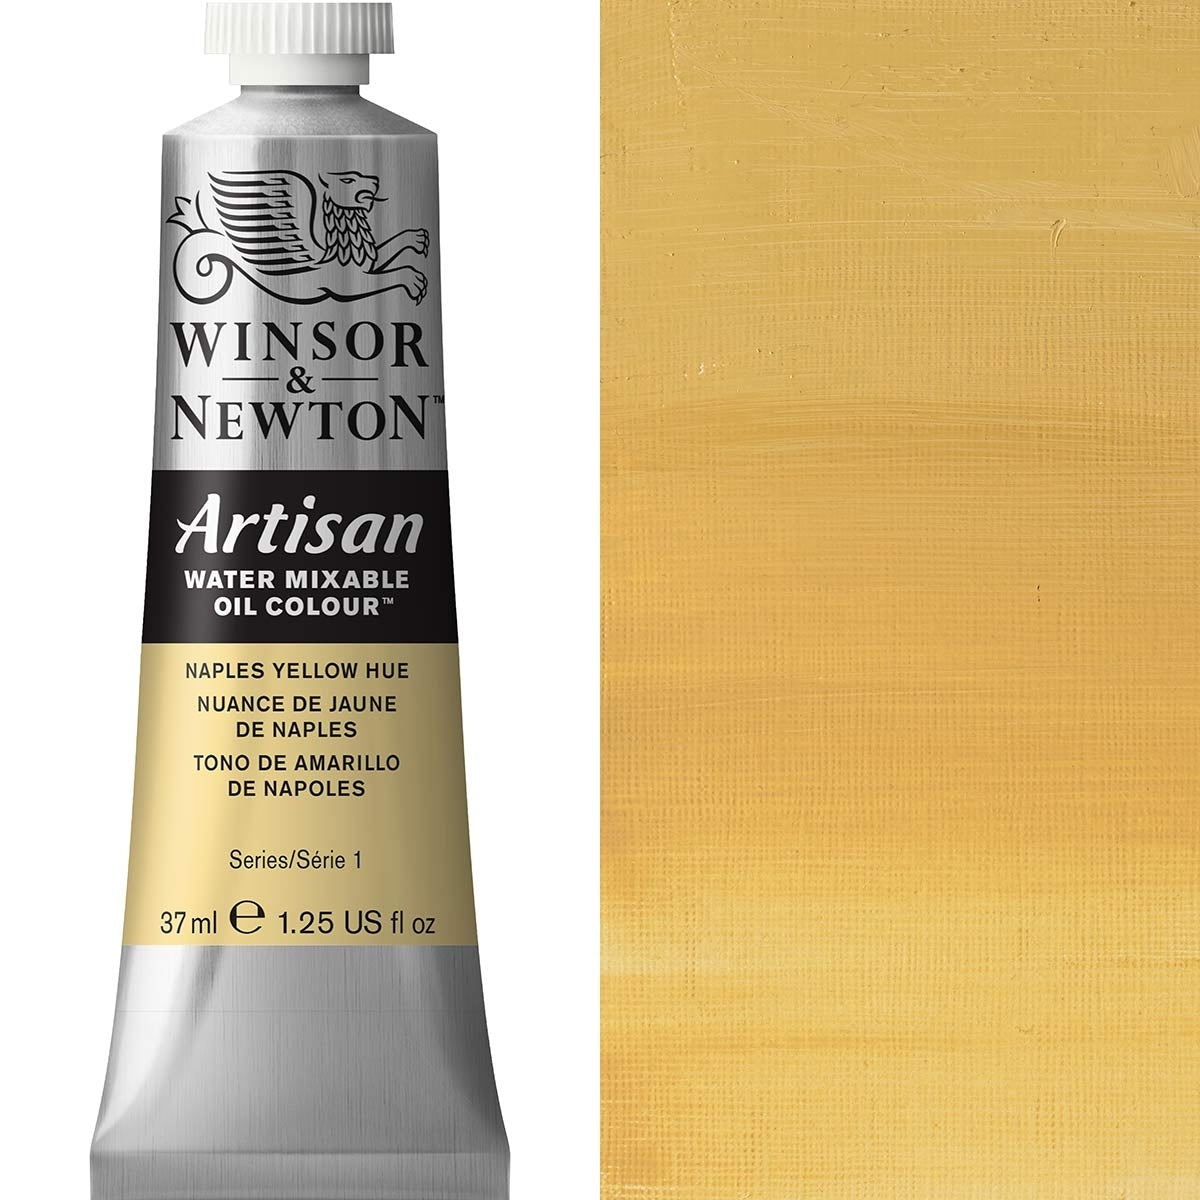 Winsor and Newton - Artisan Oil Colour Watermixable - 37ml - Naples Yellow Hue